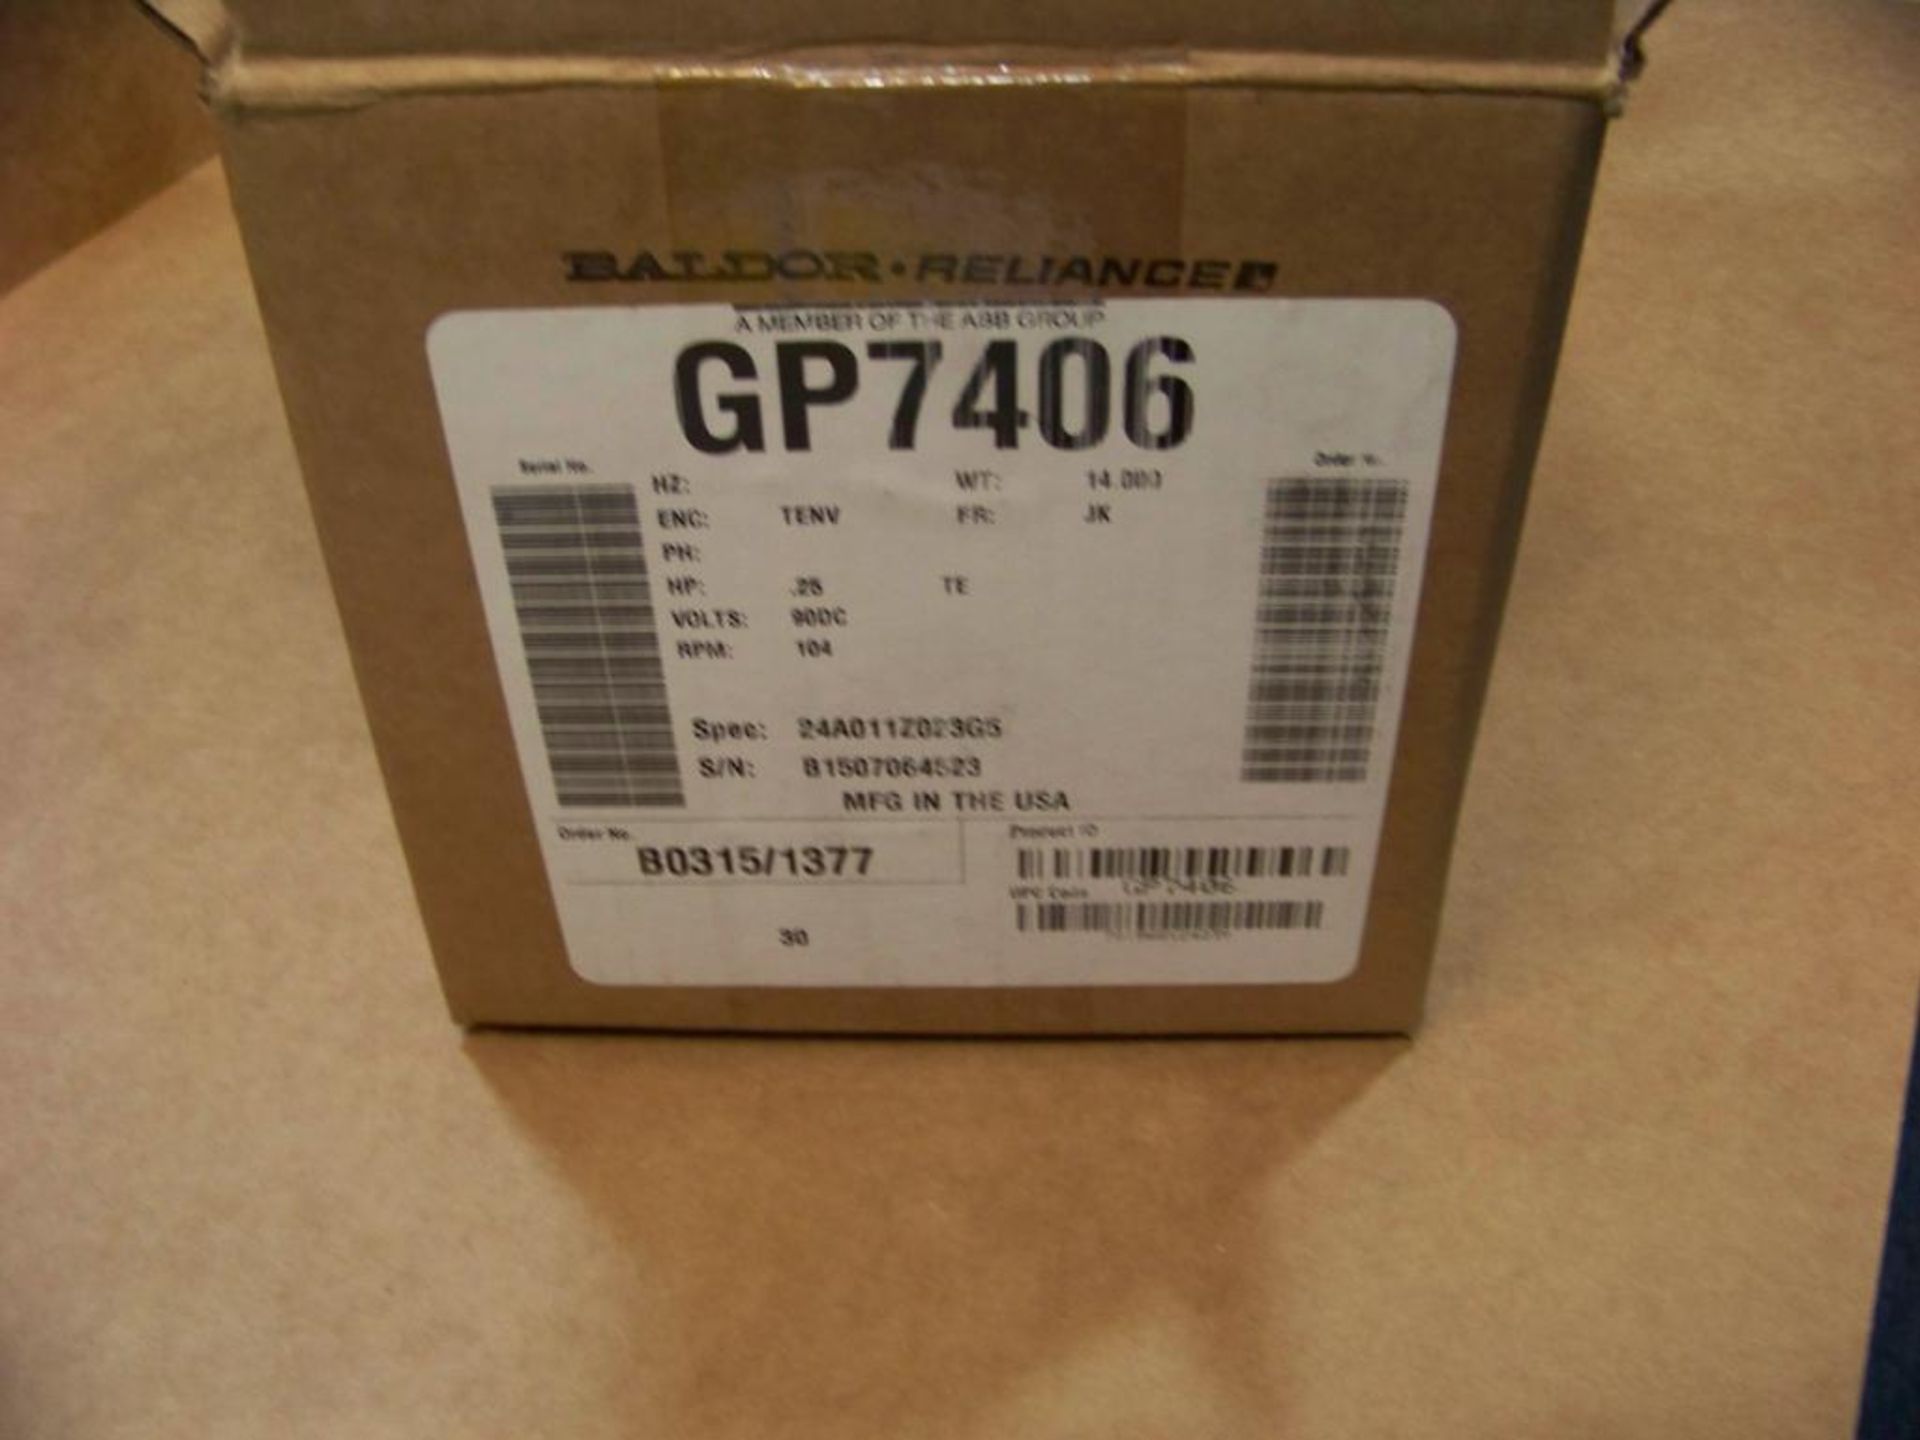 1 ABB BALDOR GP7406 RIGHT ANGLE GEAR MOTOR, NEW IN BOX - Image 2 of 3